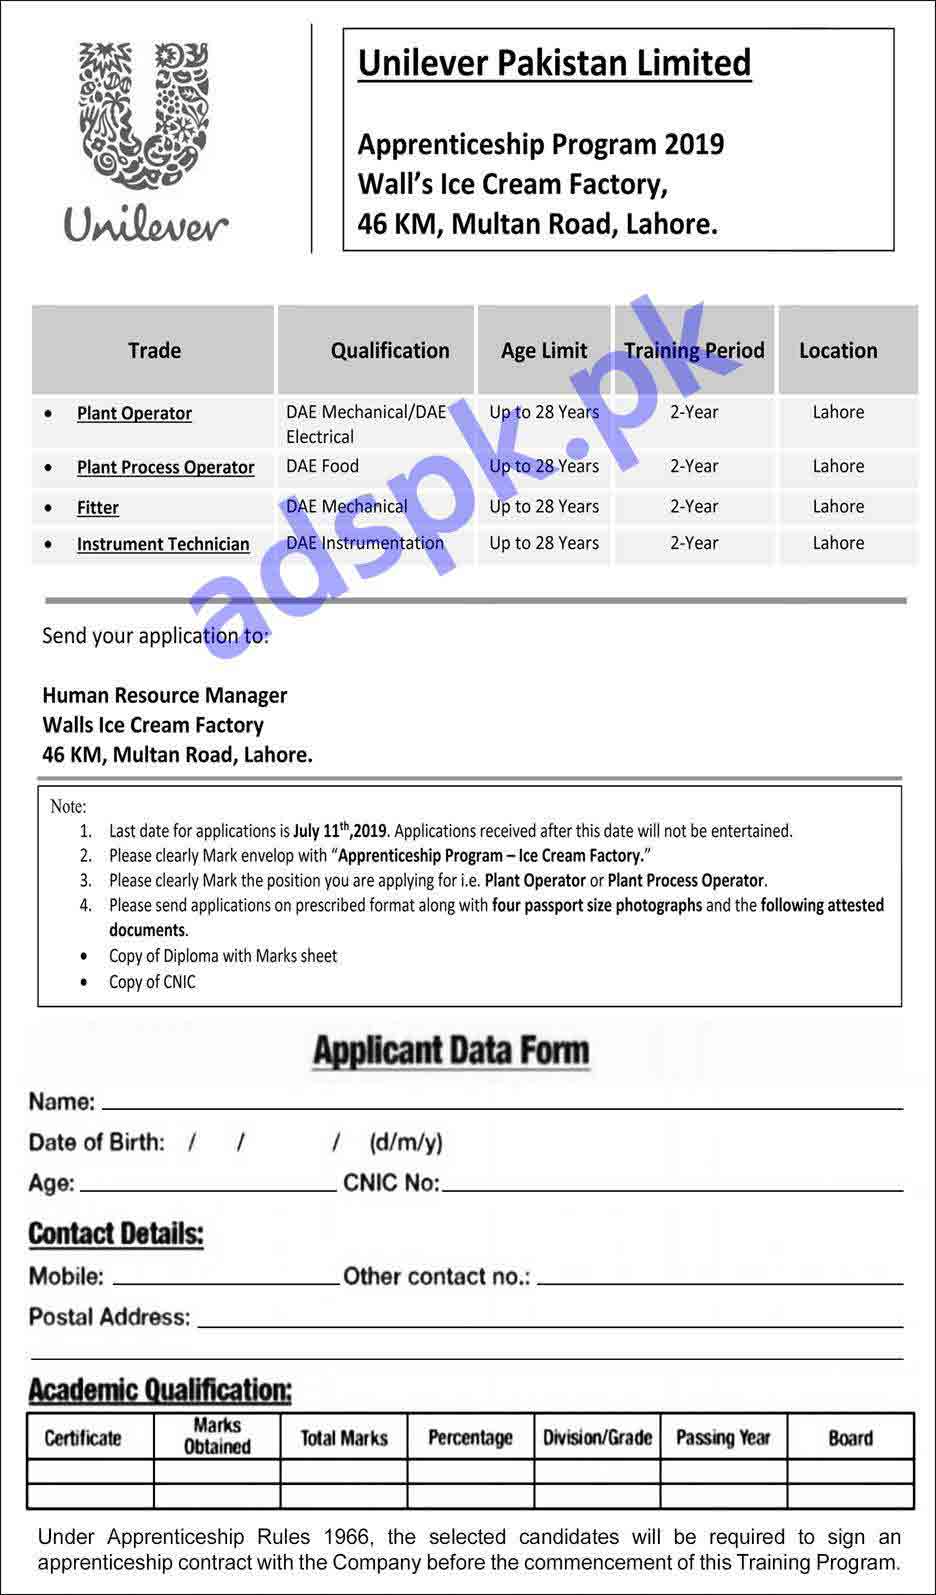 Unilever Pakistan Limited Apprenticeship Program 2019 Ice Cream Factory Lahore for DAE Diploma Holders Jobs Application Form Deadline 11-07-2019 Apply Now